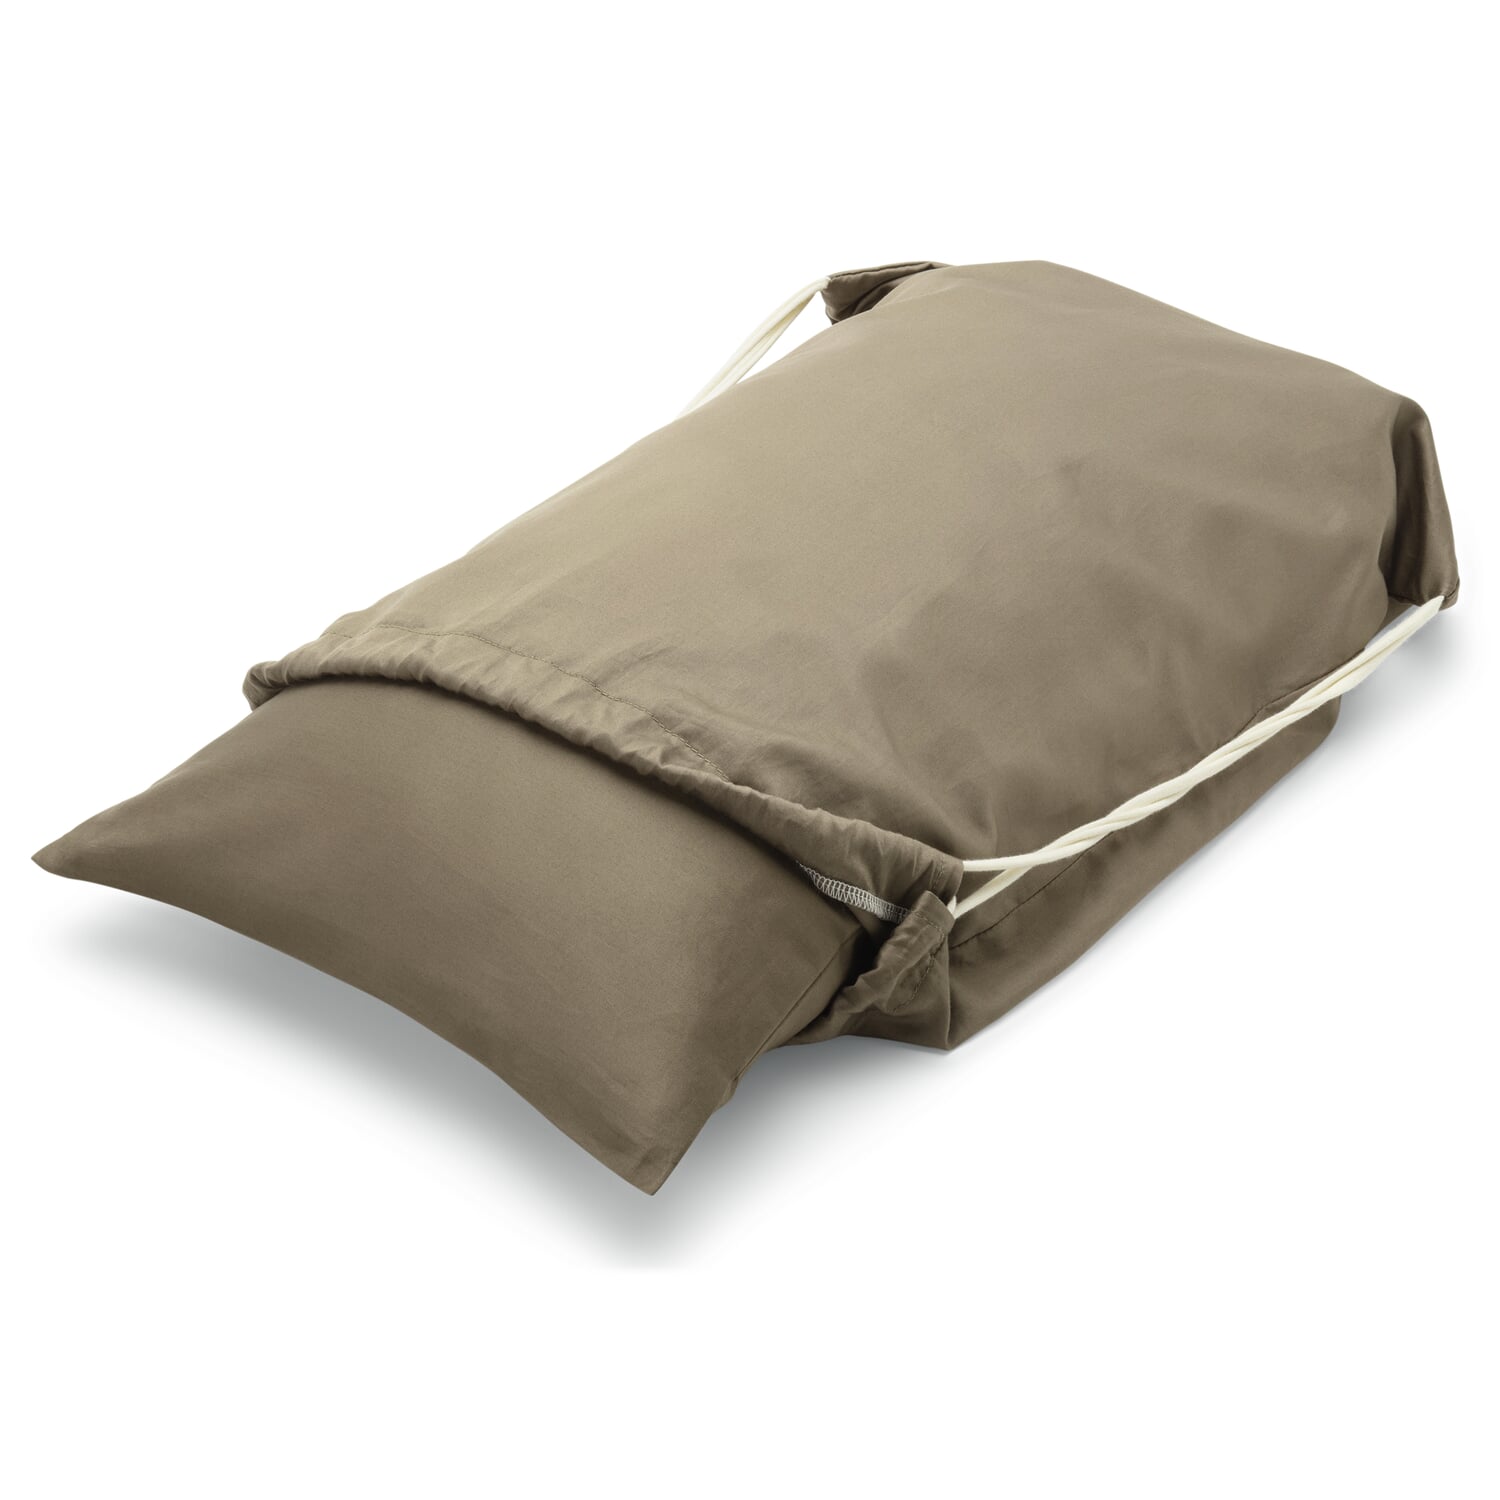 Travel pillow rubber flakes | Manufactum